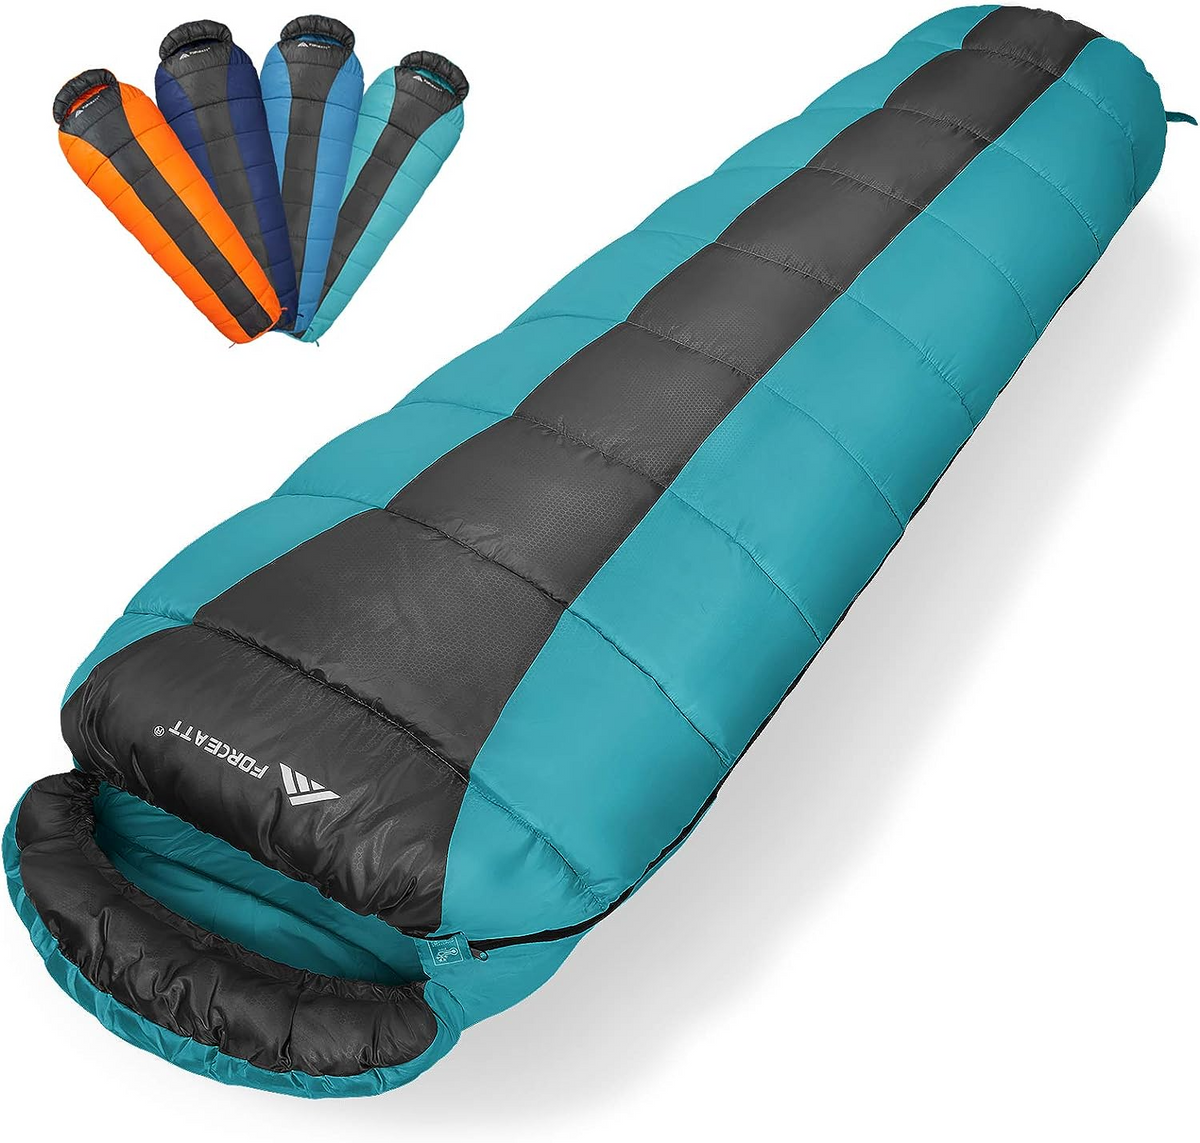 Forceatt sleeping bag for adults